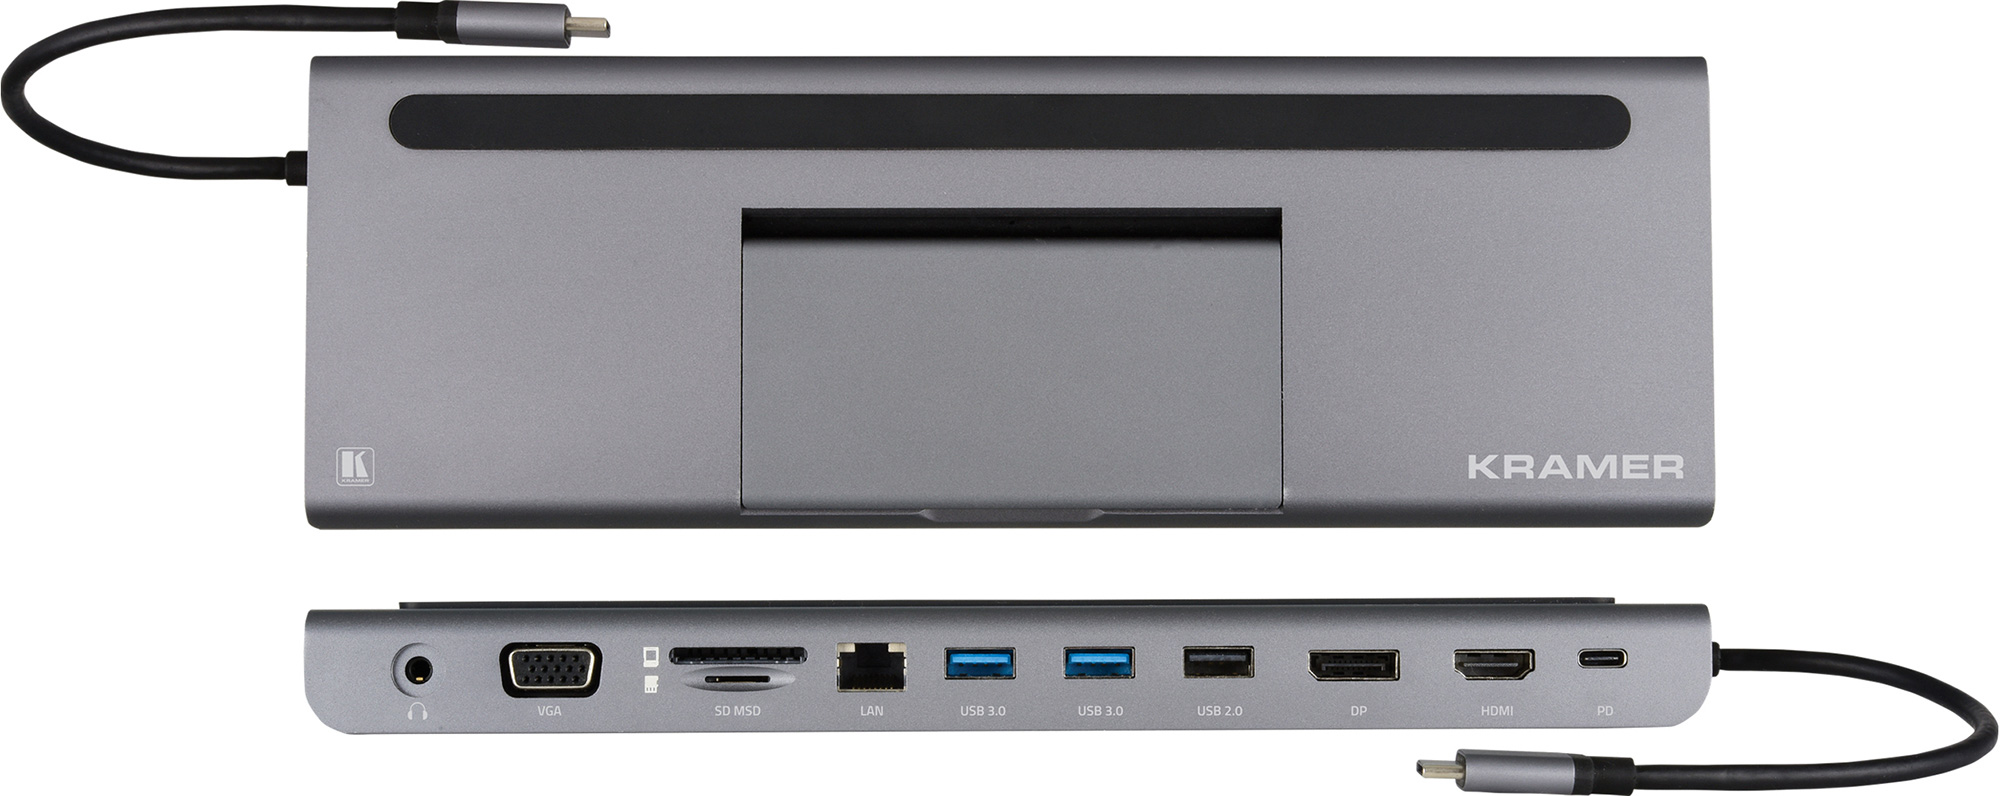 Kramer KDOCK-4 USB-C Hub Multiport Adapter - 4k@30 HDMI/DisplayPort Out/VGA/Ethernet/USB3.0 Data & Charging/SD/MicroSD KR-KDOCK-4